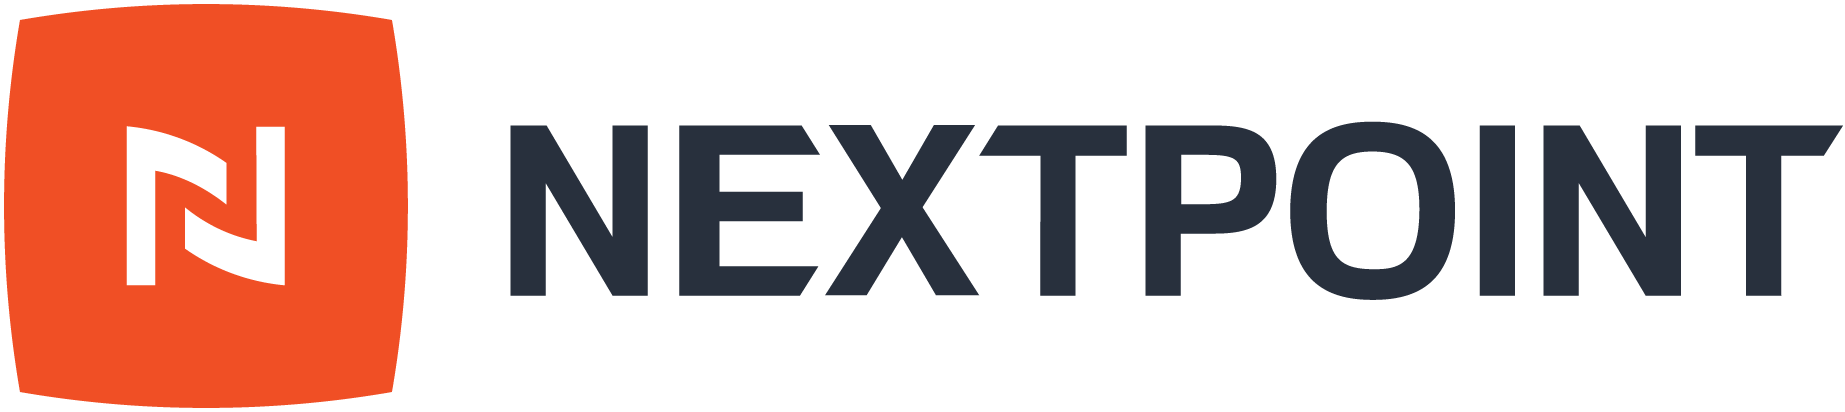 Nextpoint_Logo_website-1 copy